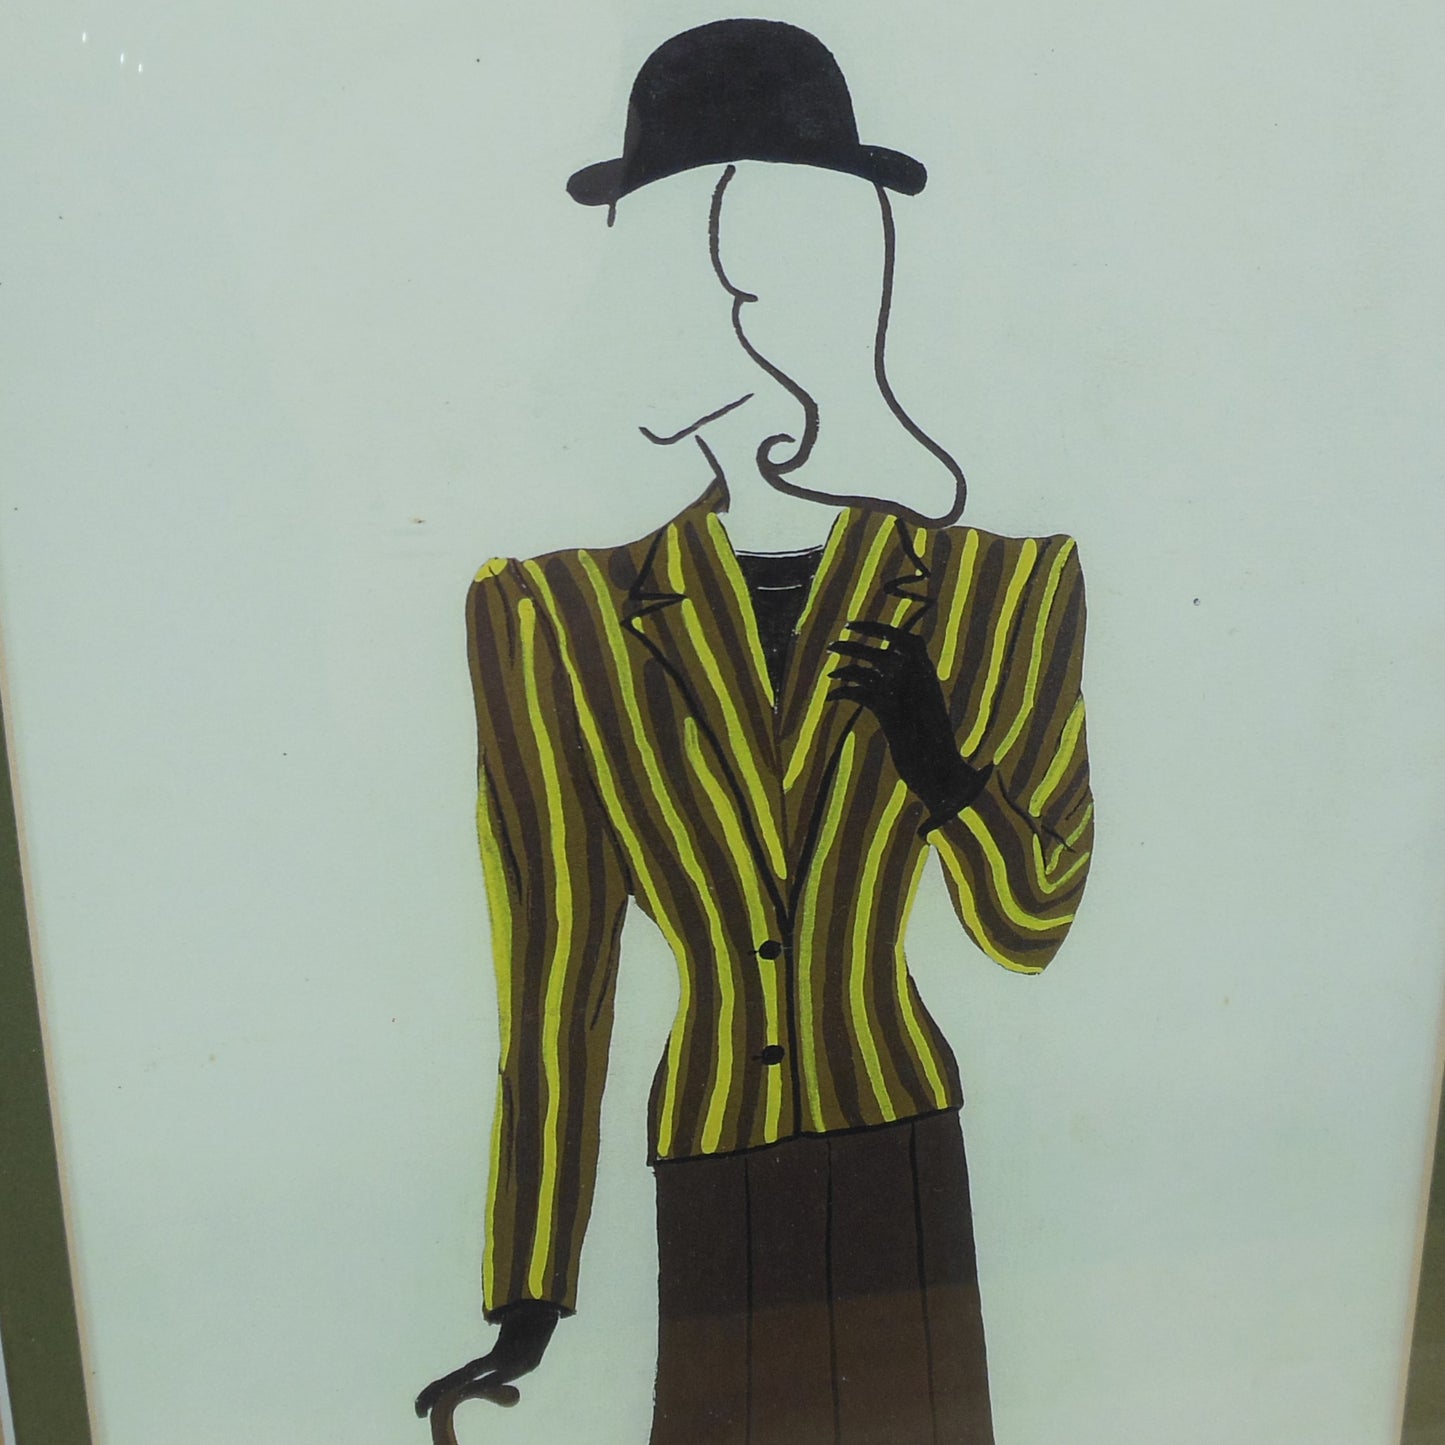 Harvey Signed Fashion Illustration Vintage Yellow Strip Women's Coat Derby Umbrella